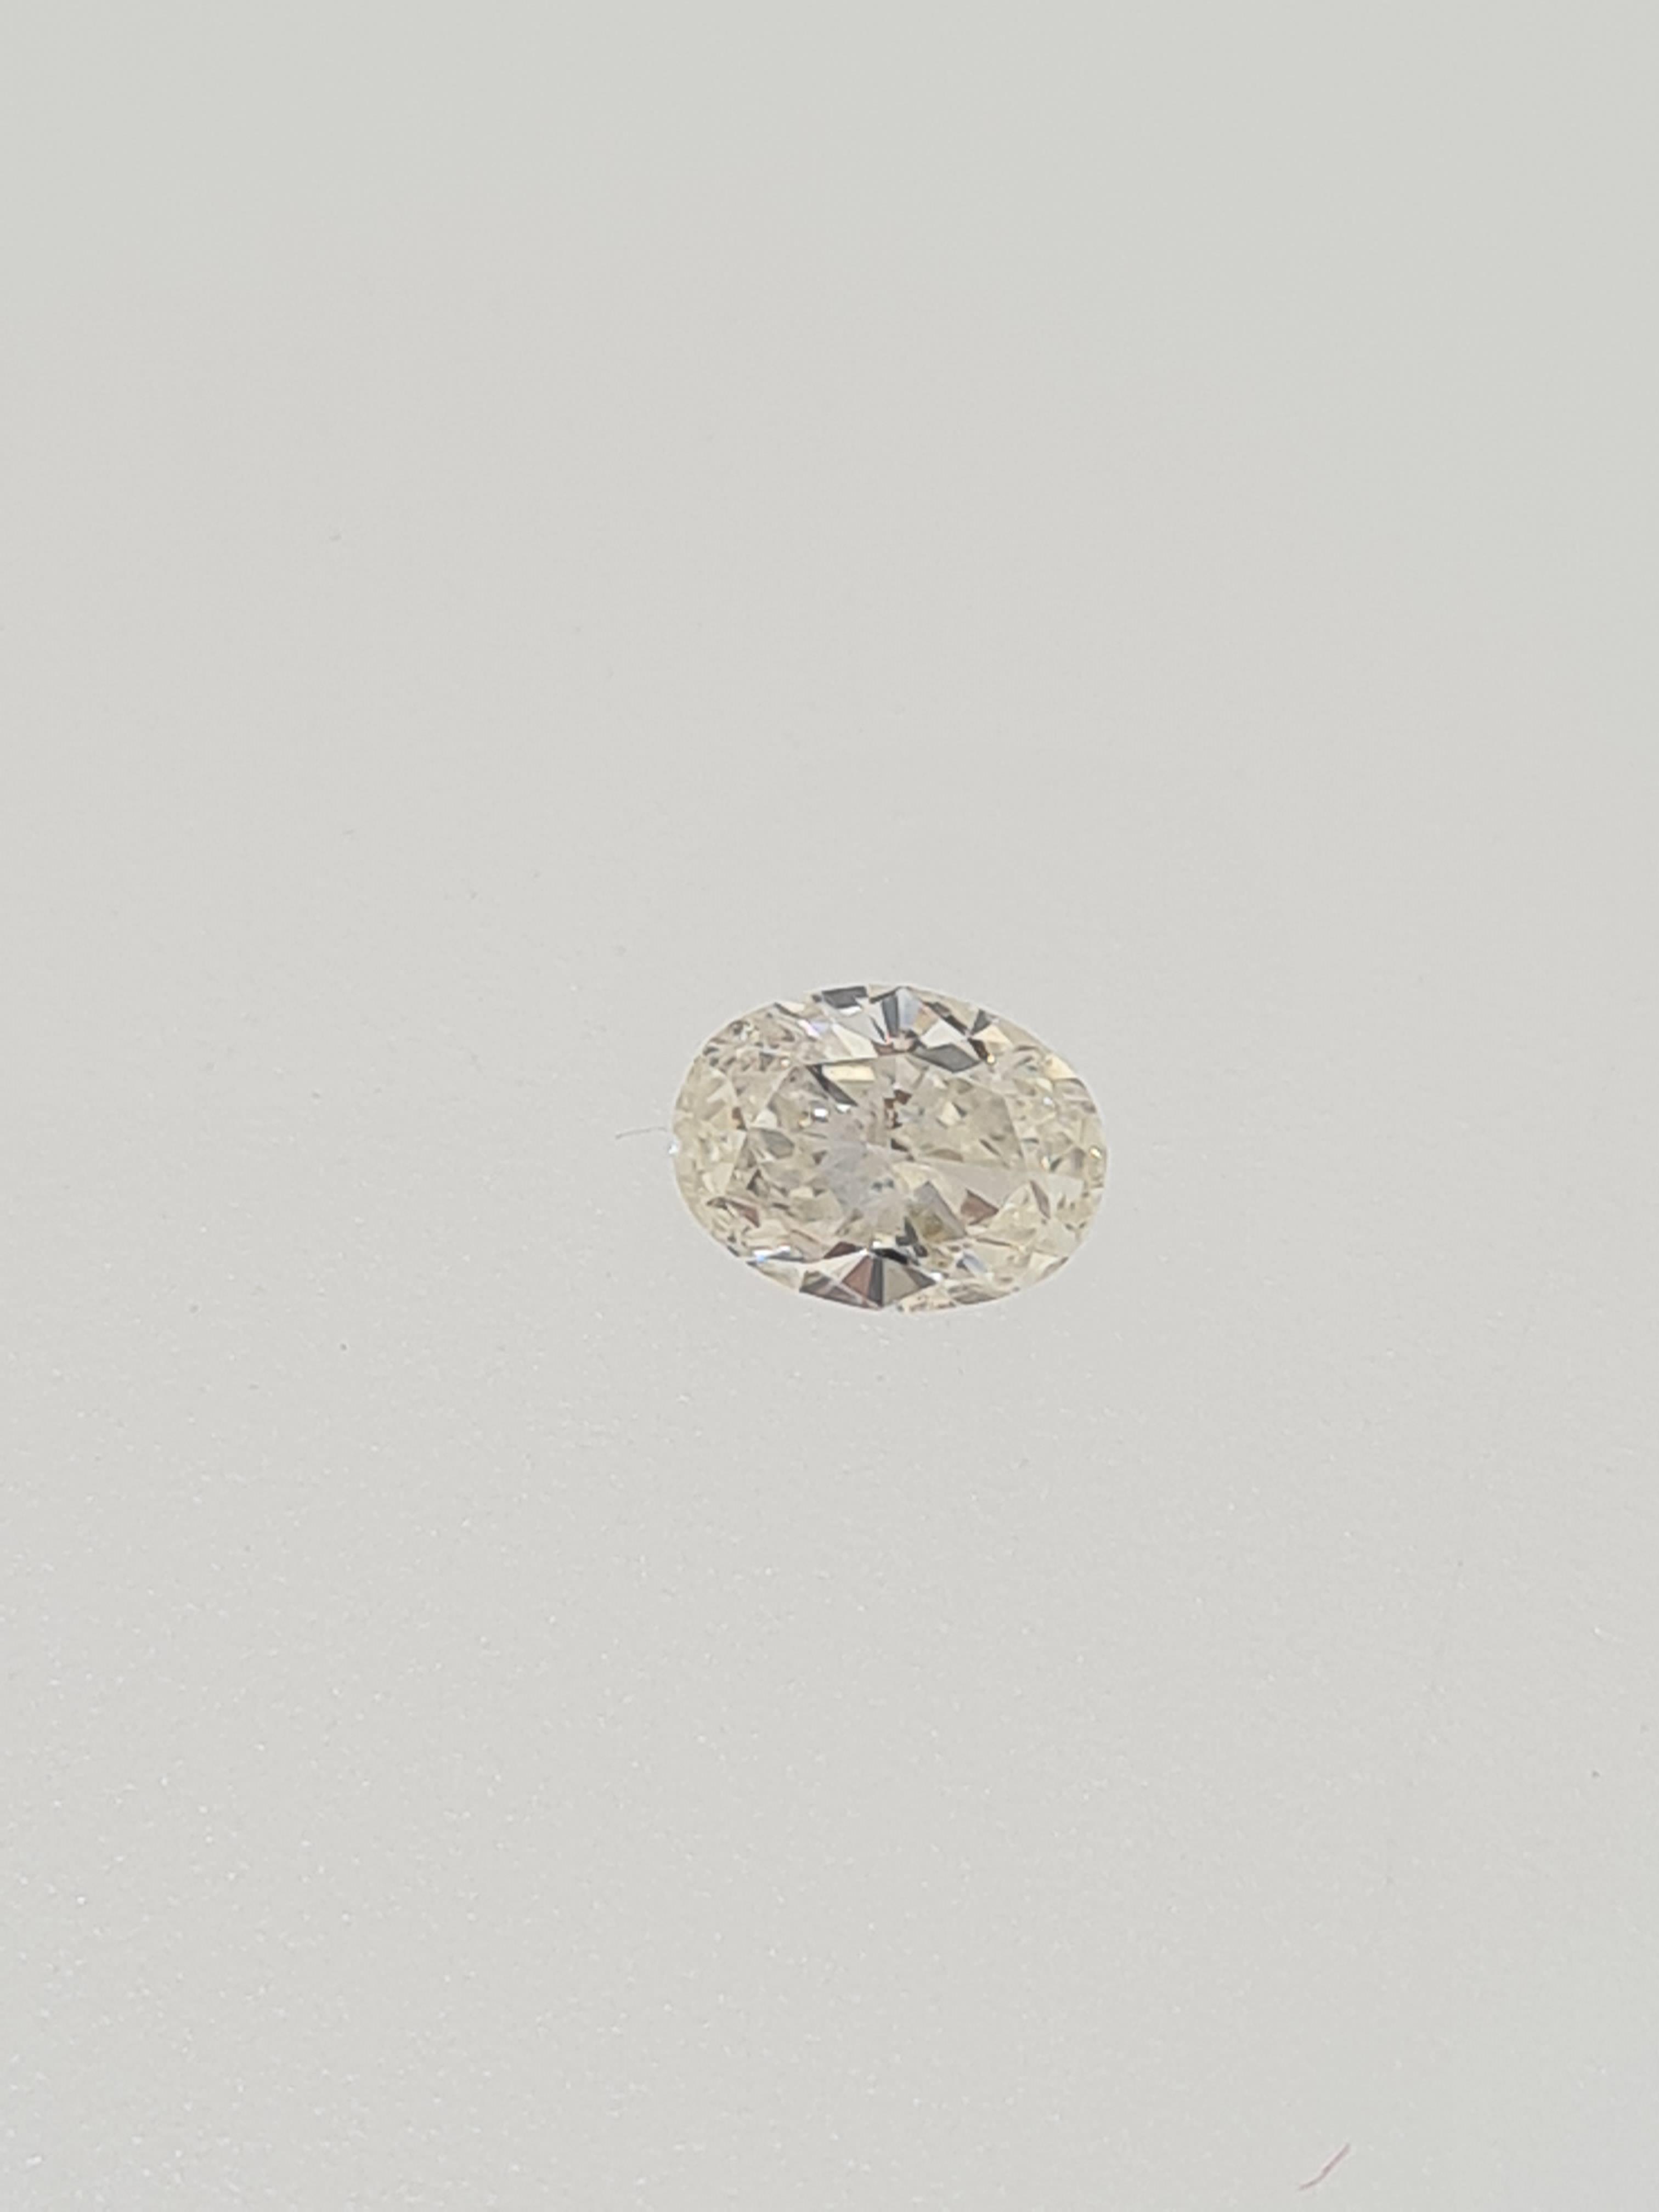 Oval cut diamond - Image 5 of 5